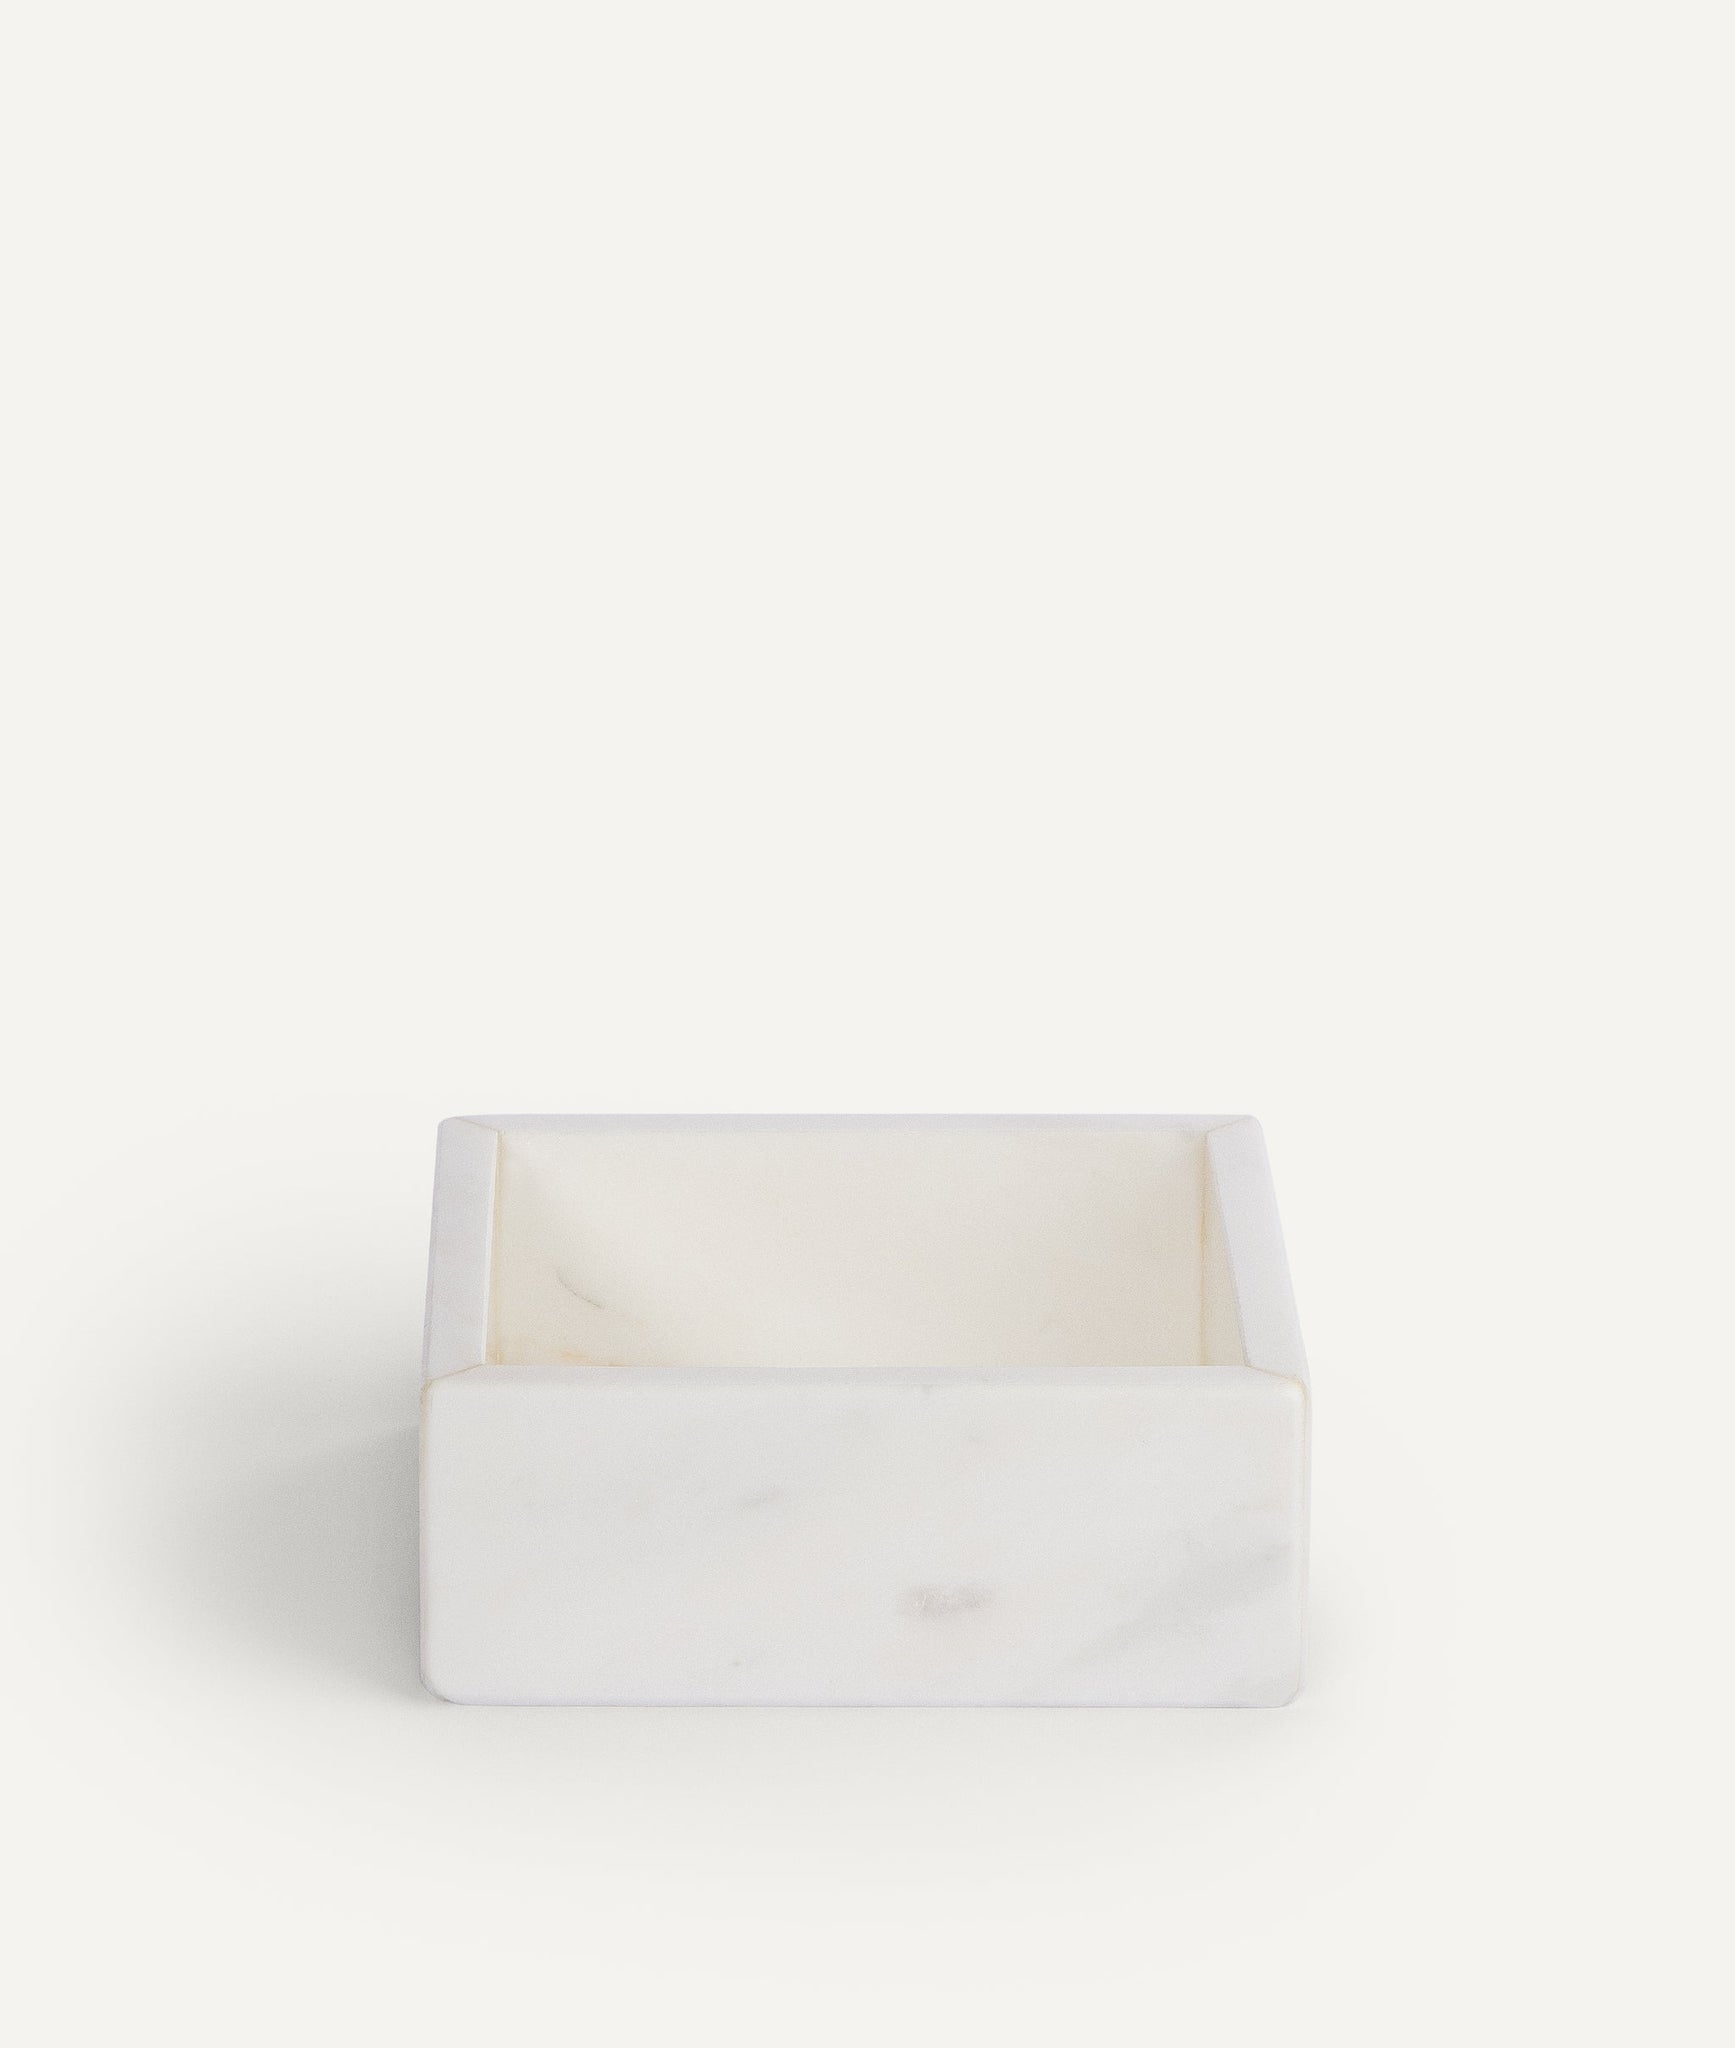 Cotton Box in Carrara Marble